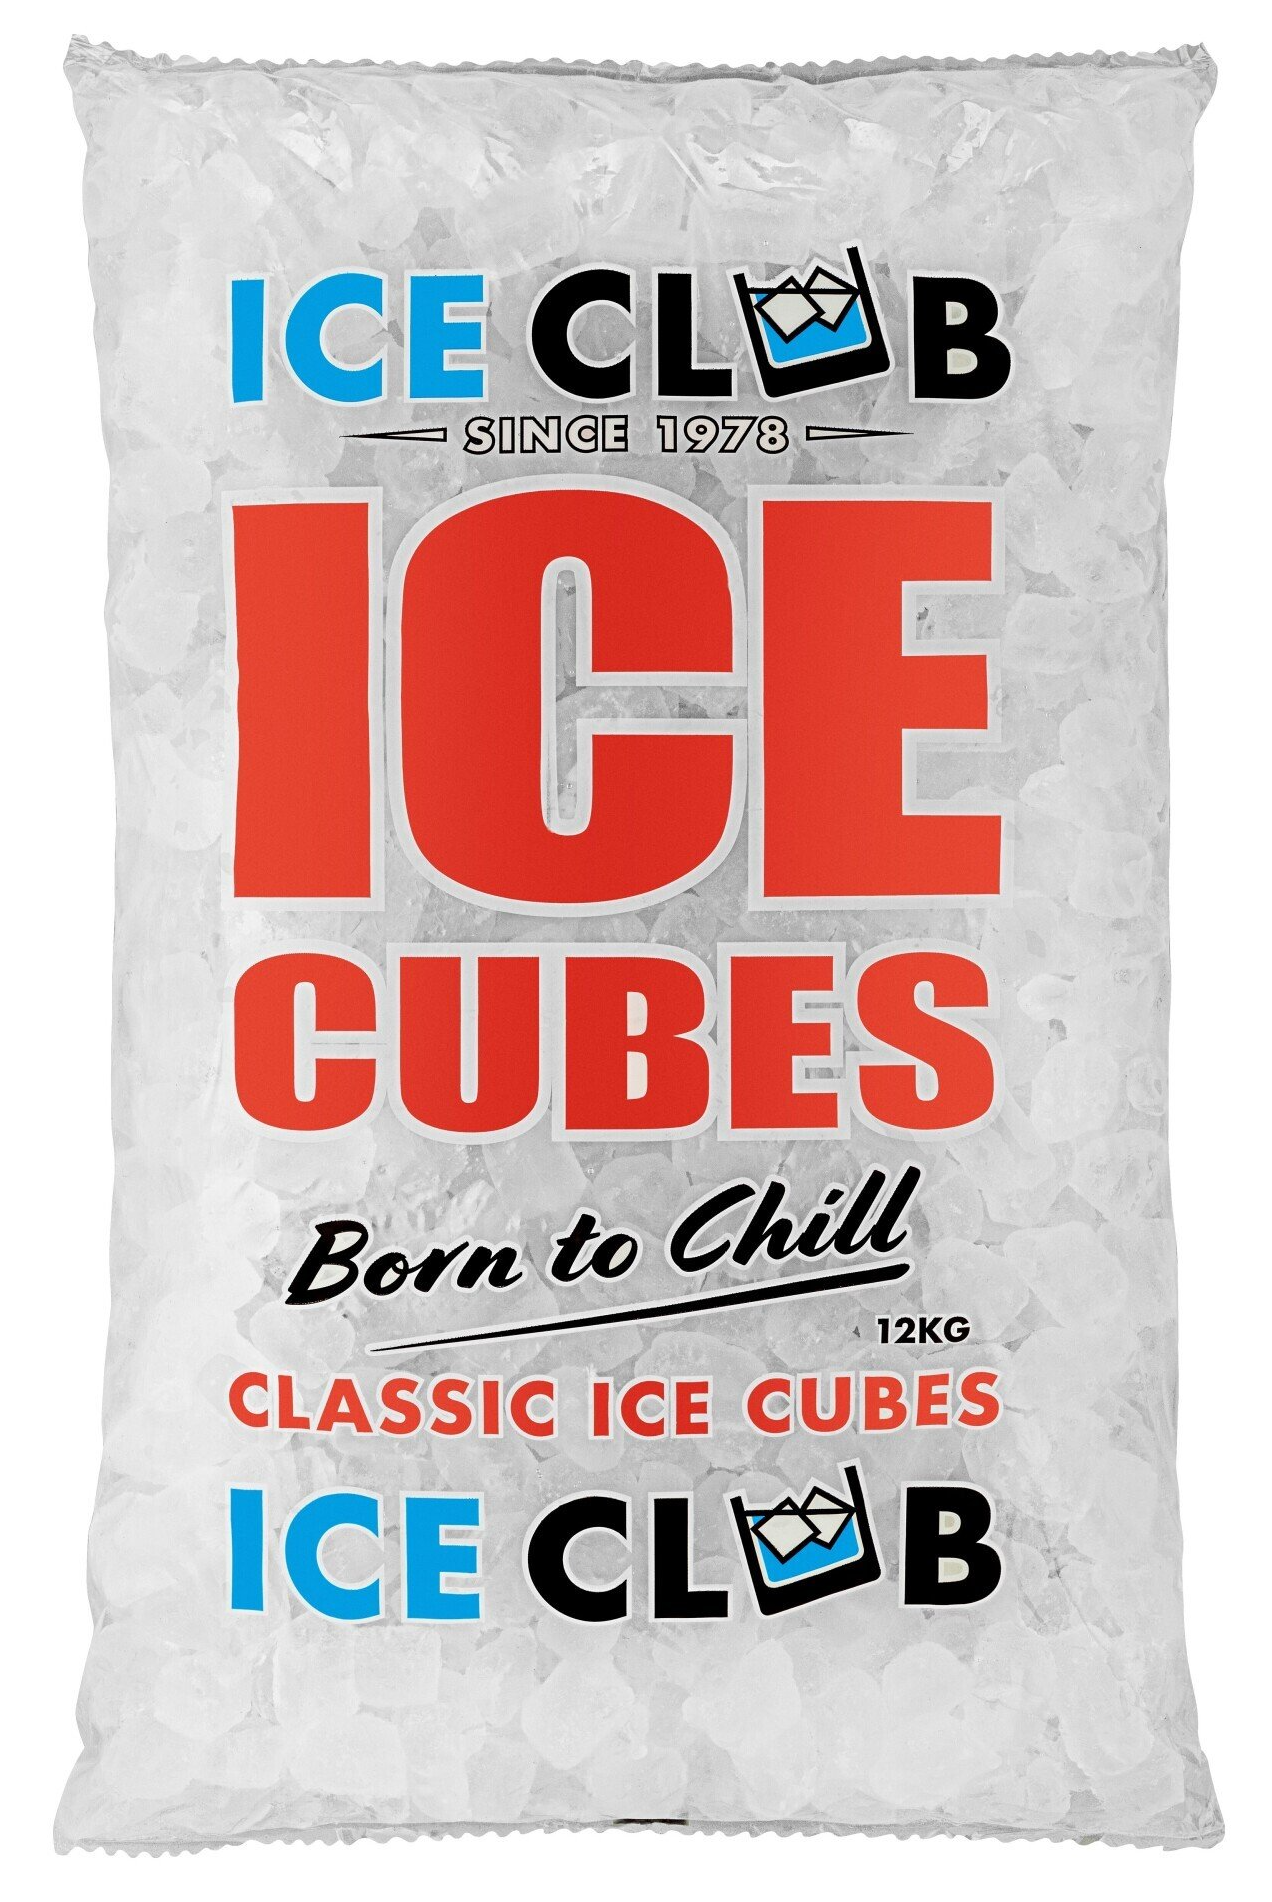 Blackwood's ice cubes